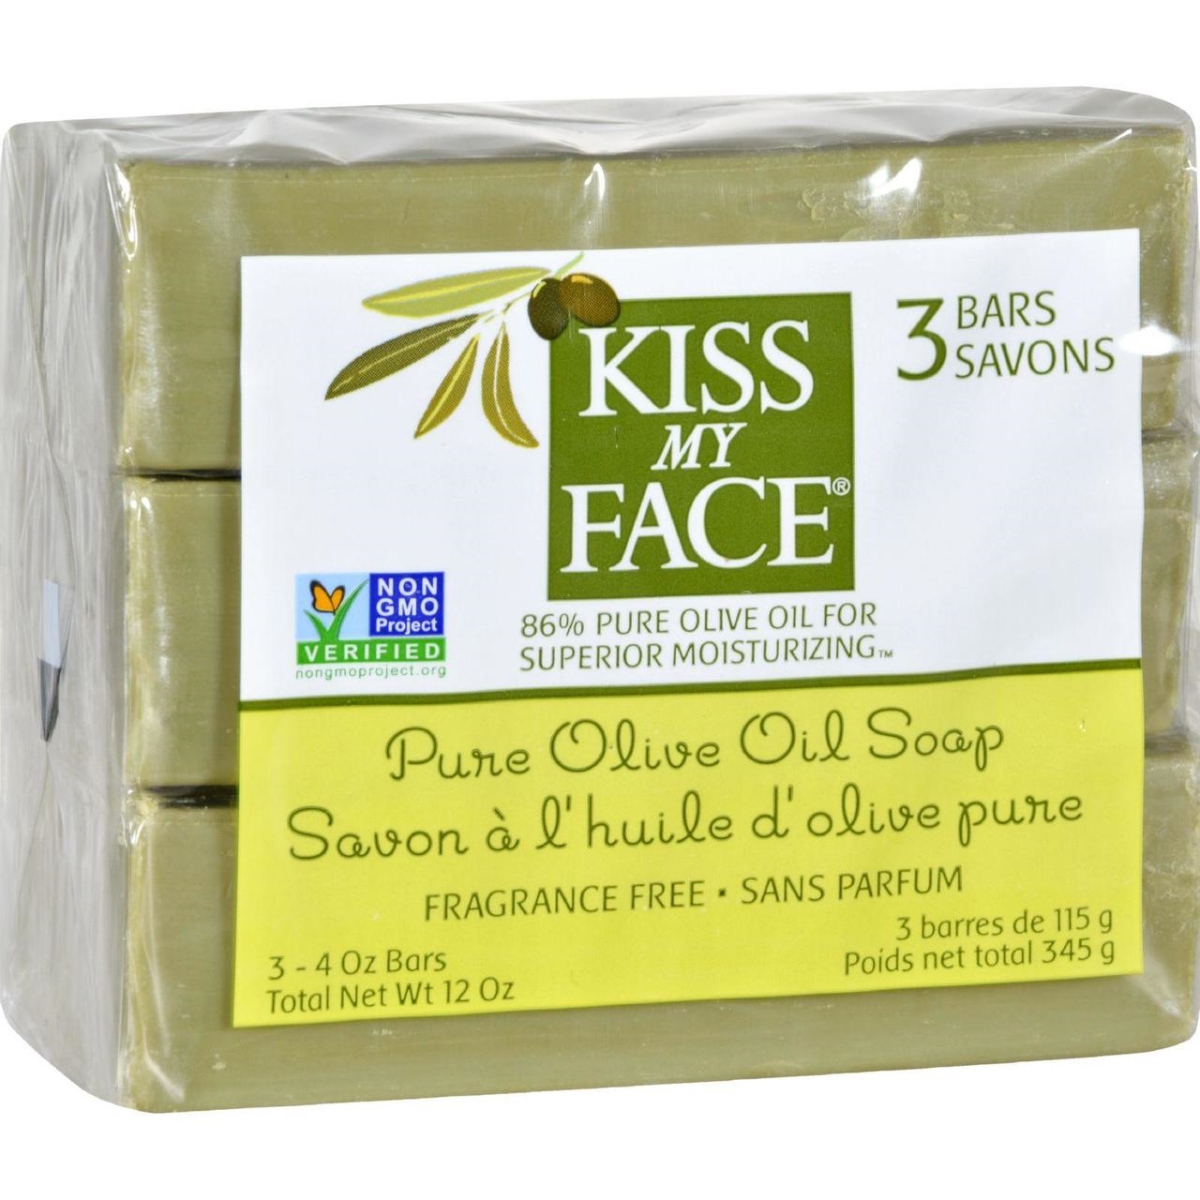 Hg1141837 4 Oz Pure Olive Oil Moisturizing Soap, Pack Of 3